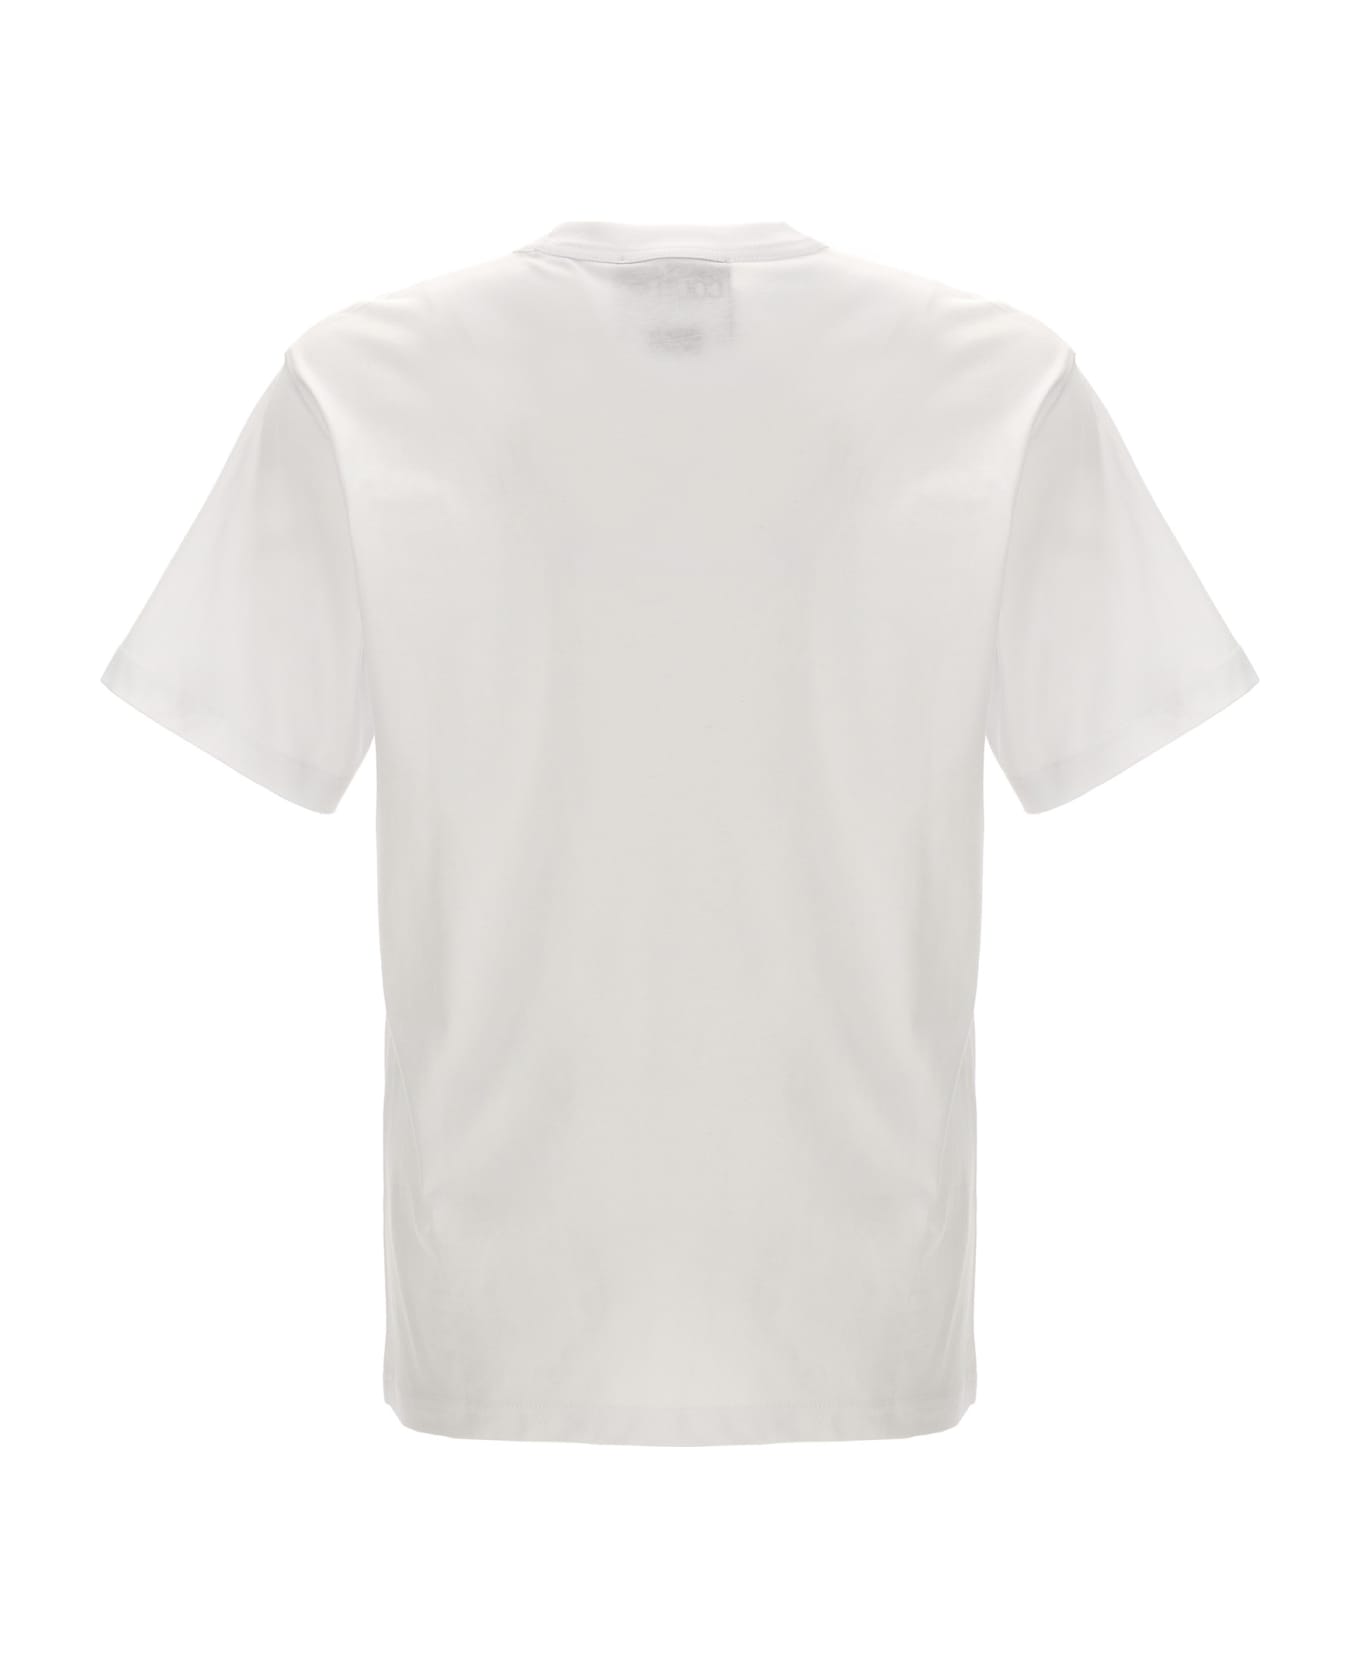 Versace Jeans Couture Logo Printed Crewneck T-shirt - White/Black